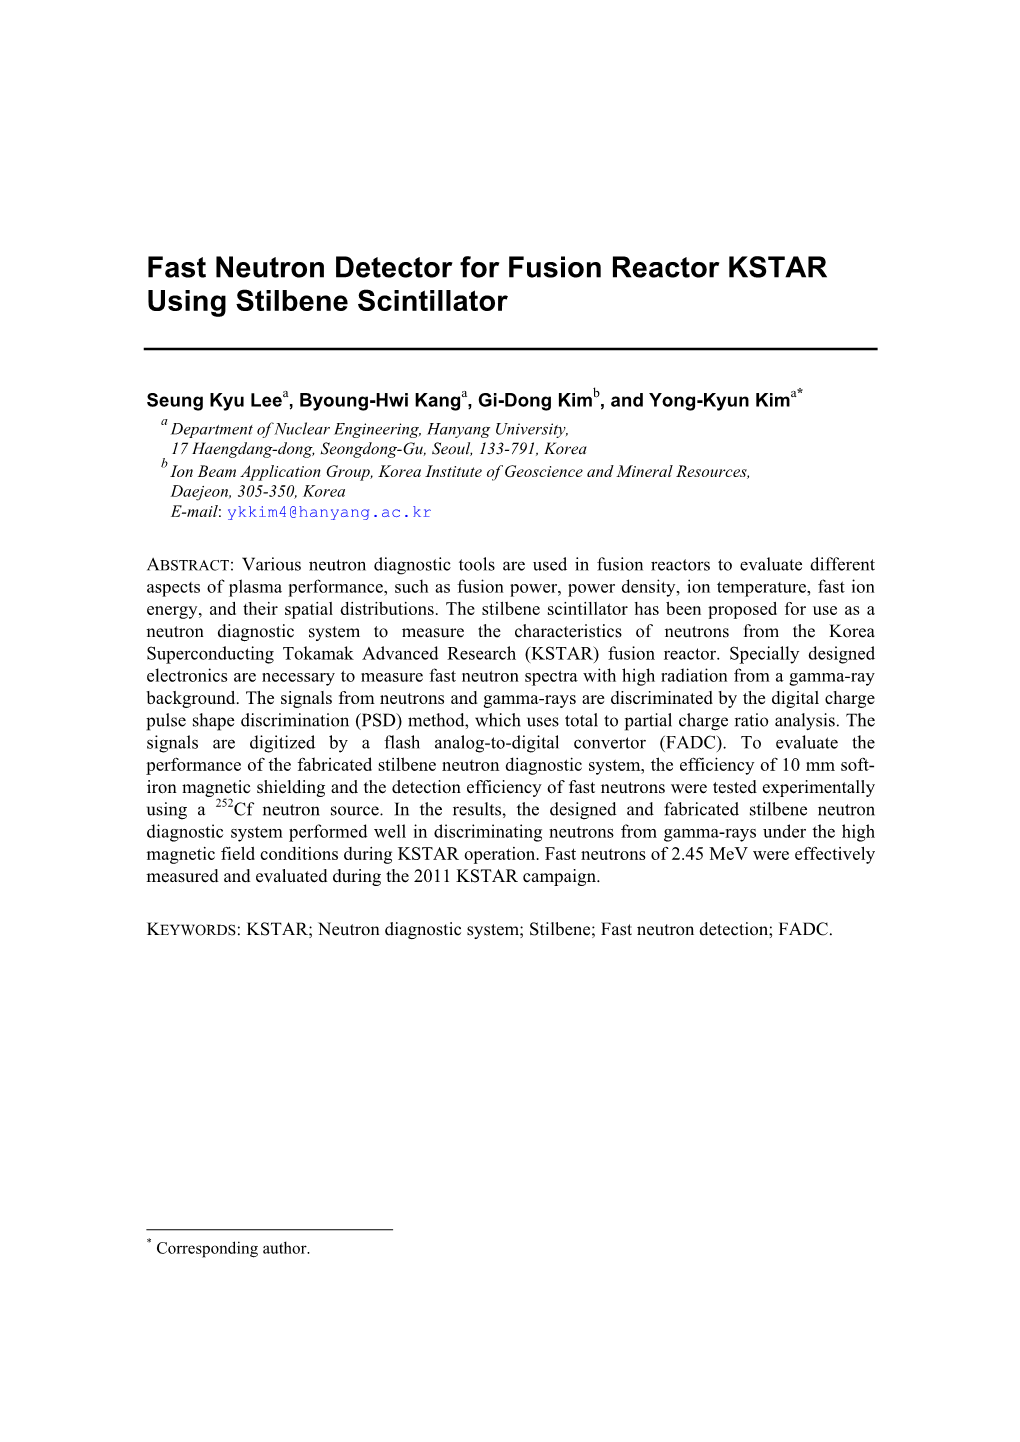 Fast Neutron Detector for Fusion Reactor KSTAR Using Stilbene Scintillator